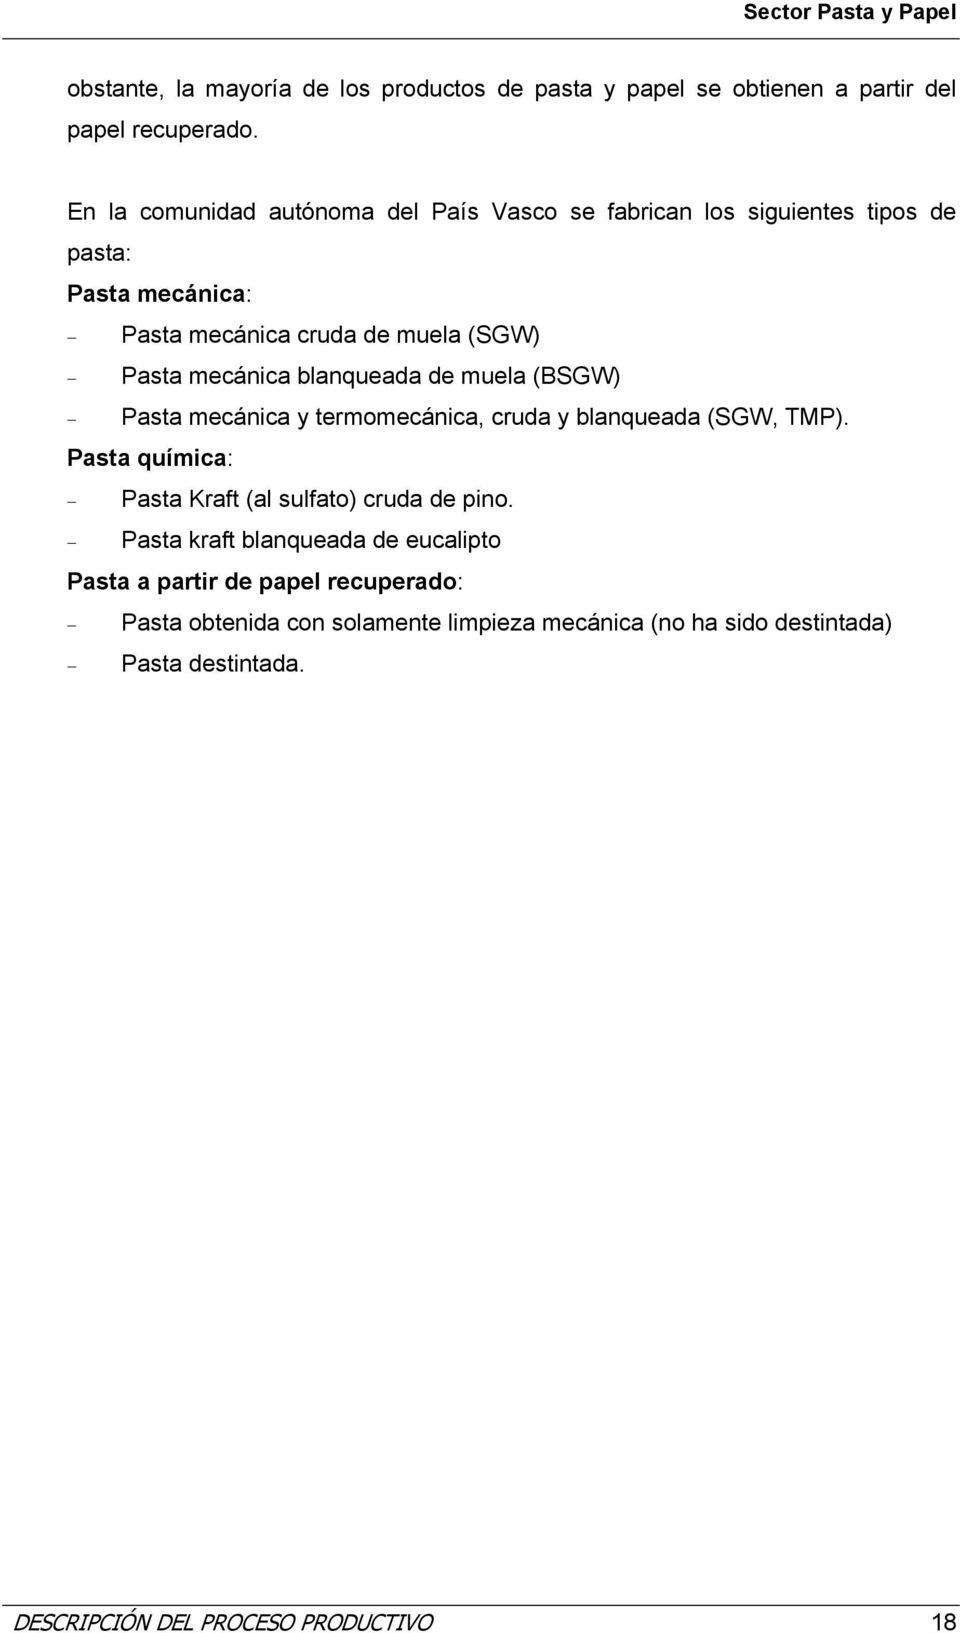 mecánica blanqueada de muela (BSGW) Pasta mecánica y termomecánica, cruda y blanqueada (SGW, TMP).